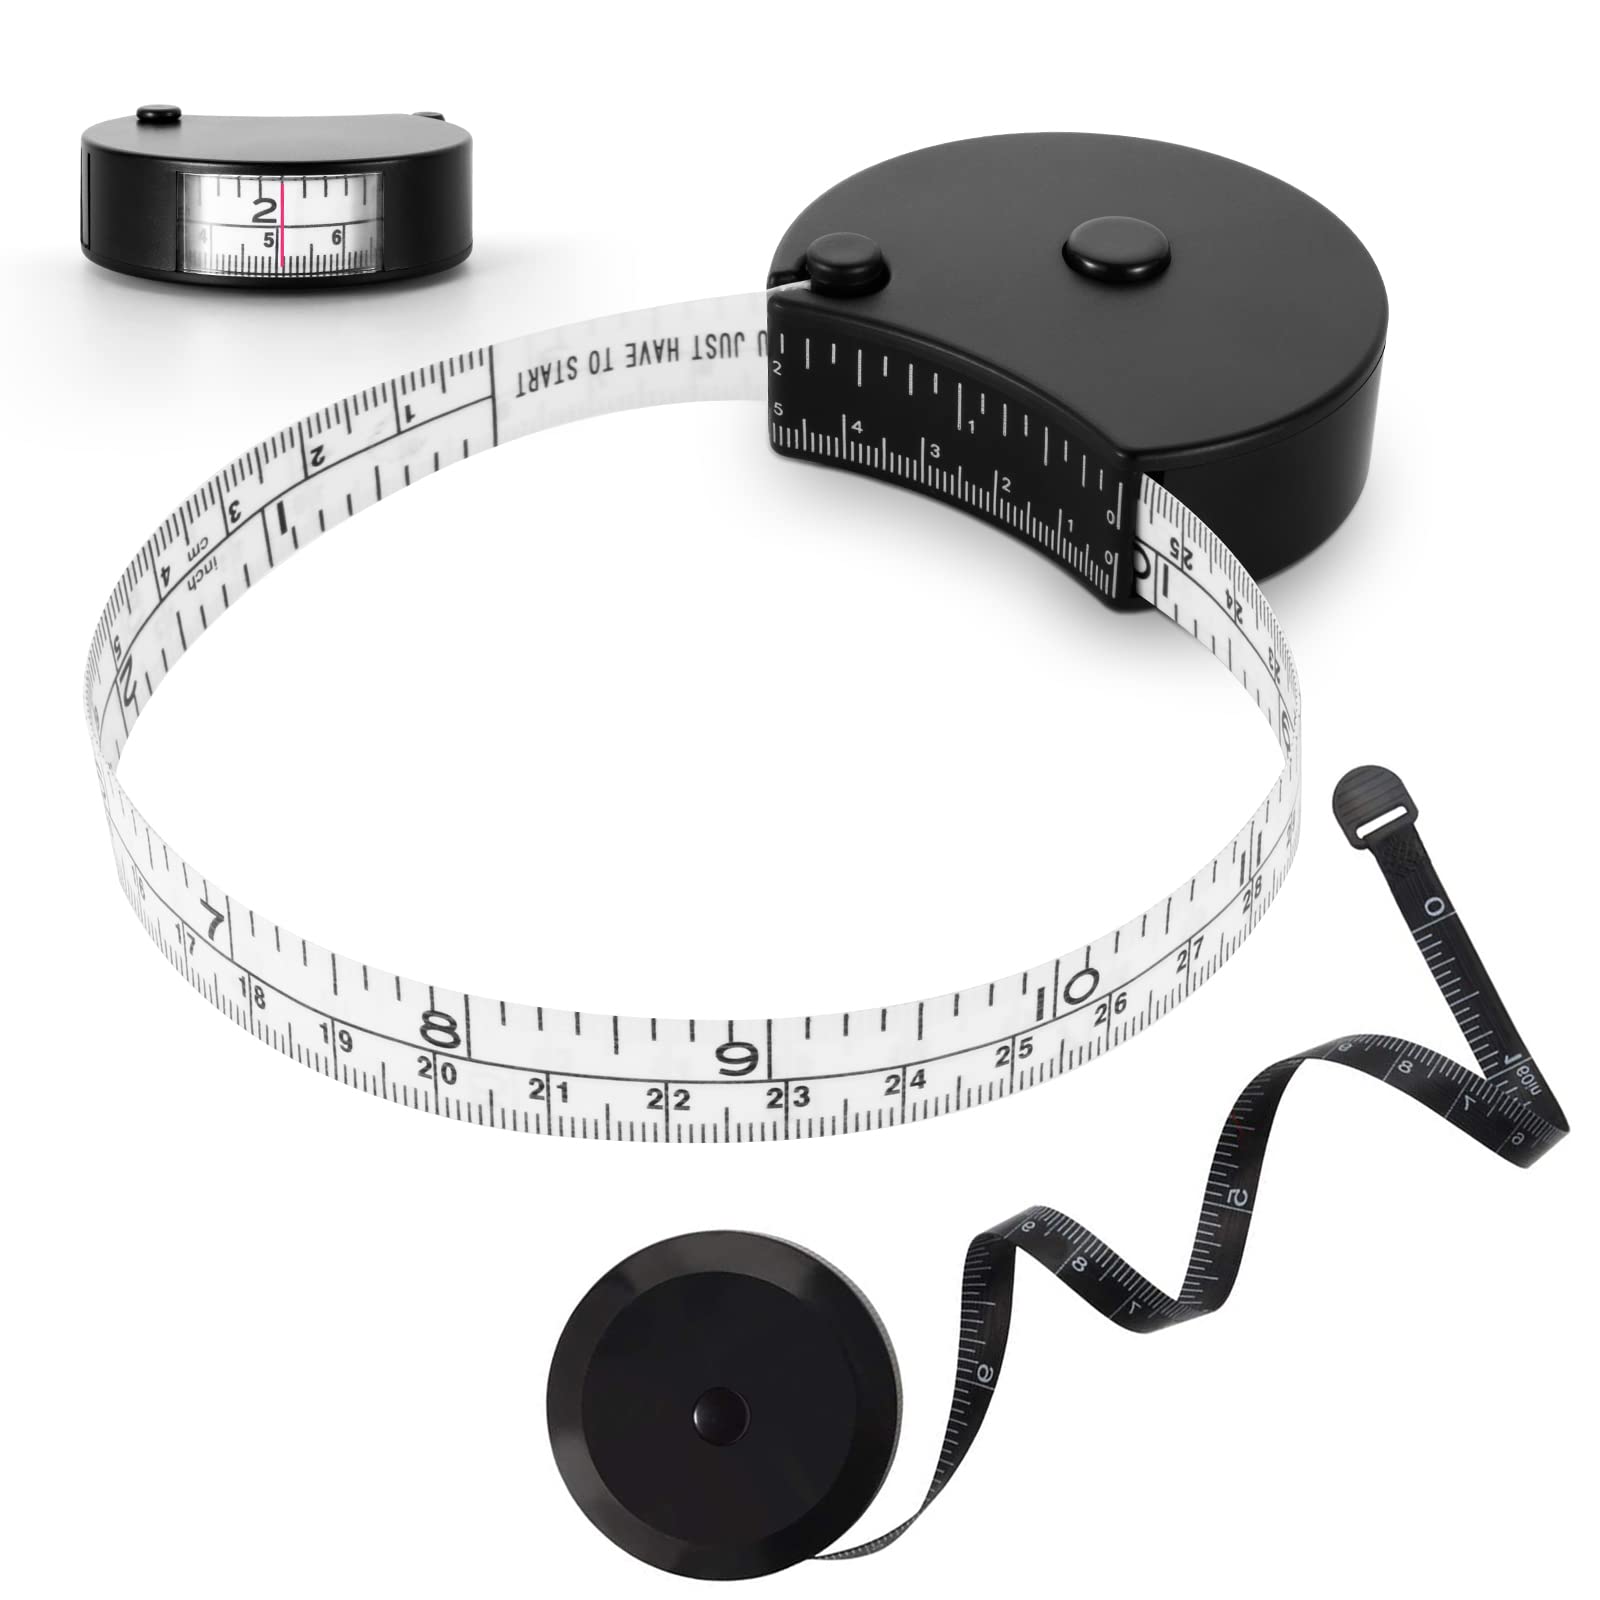 2PCS Tape Measure Body Measuring Tape 60inch (150cm), Retractable Measuring  Tape for Body Measurement & Weight Loss, Accurate Body Tape Measure for